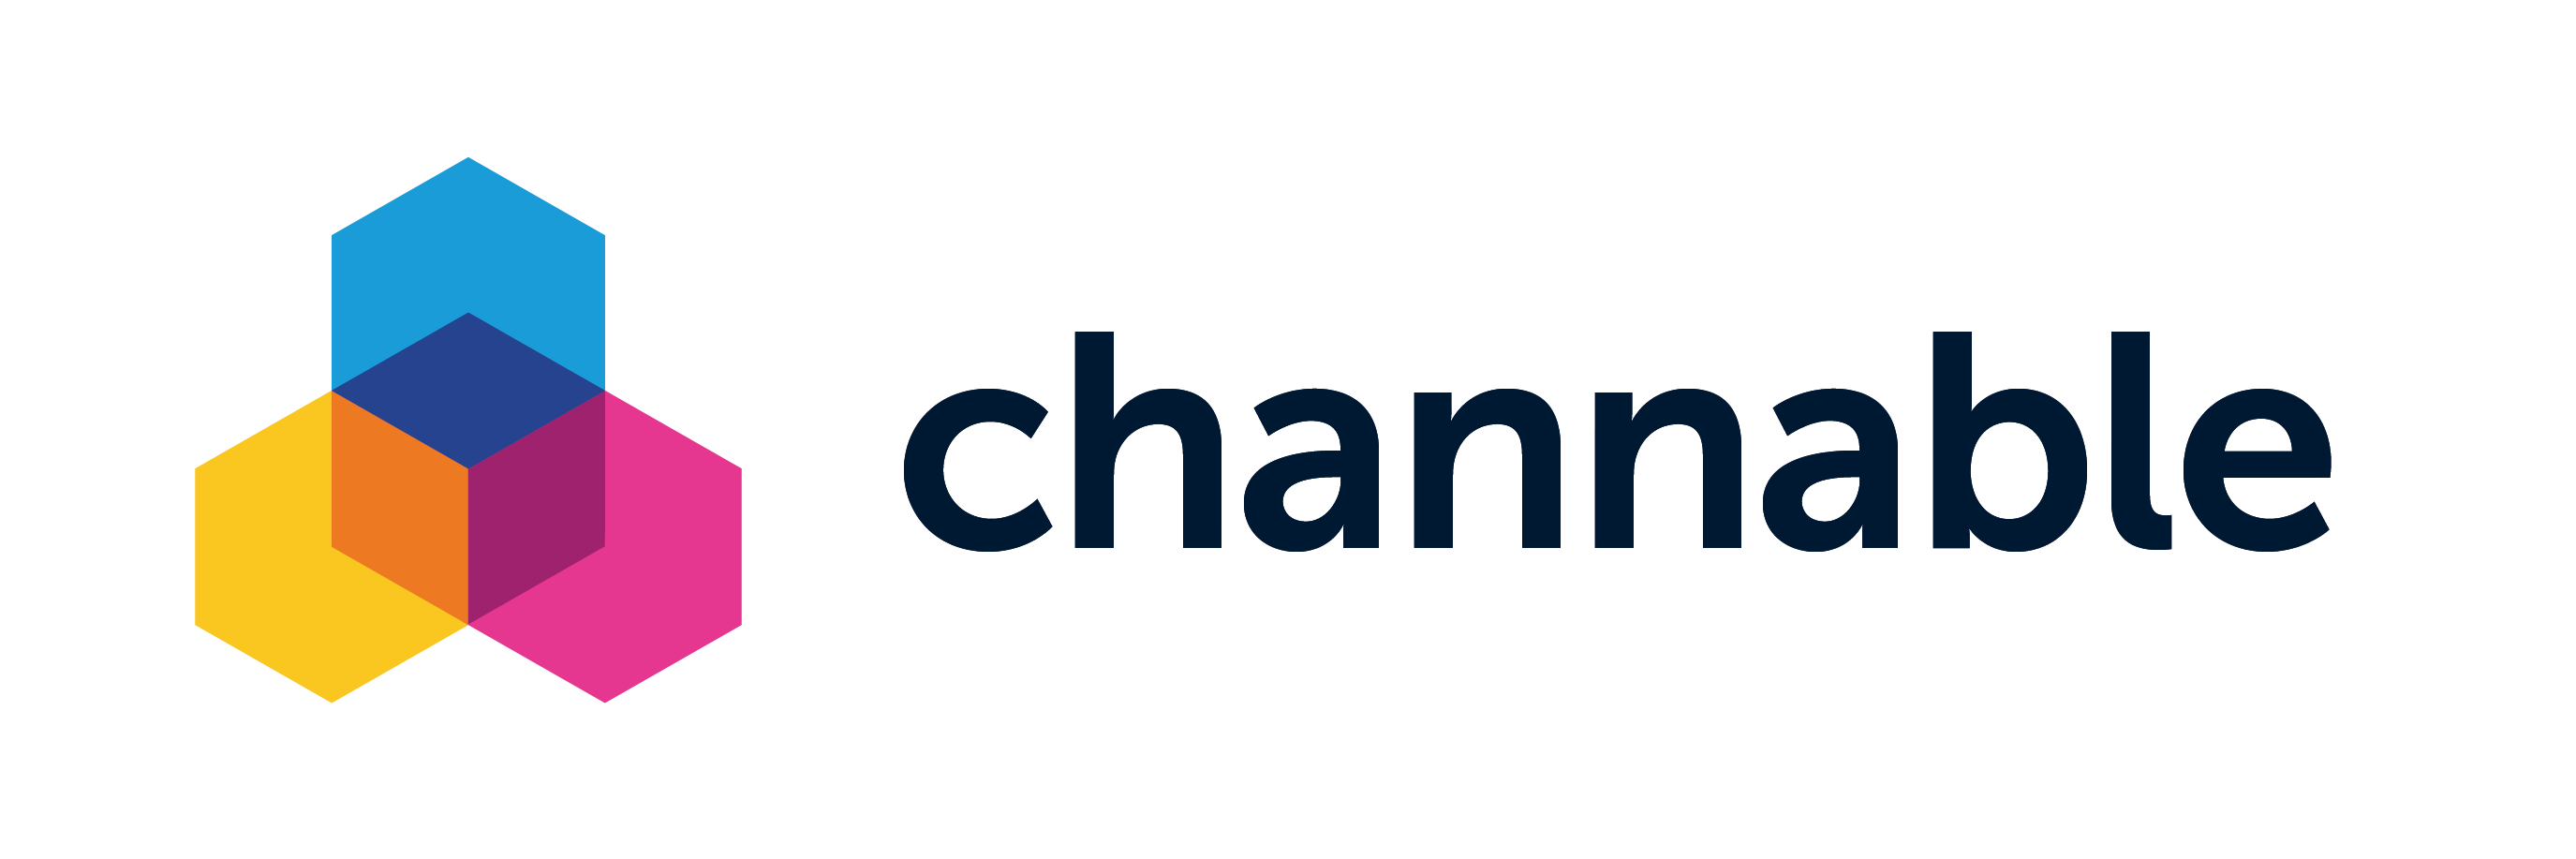 Channable DB logo